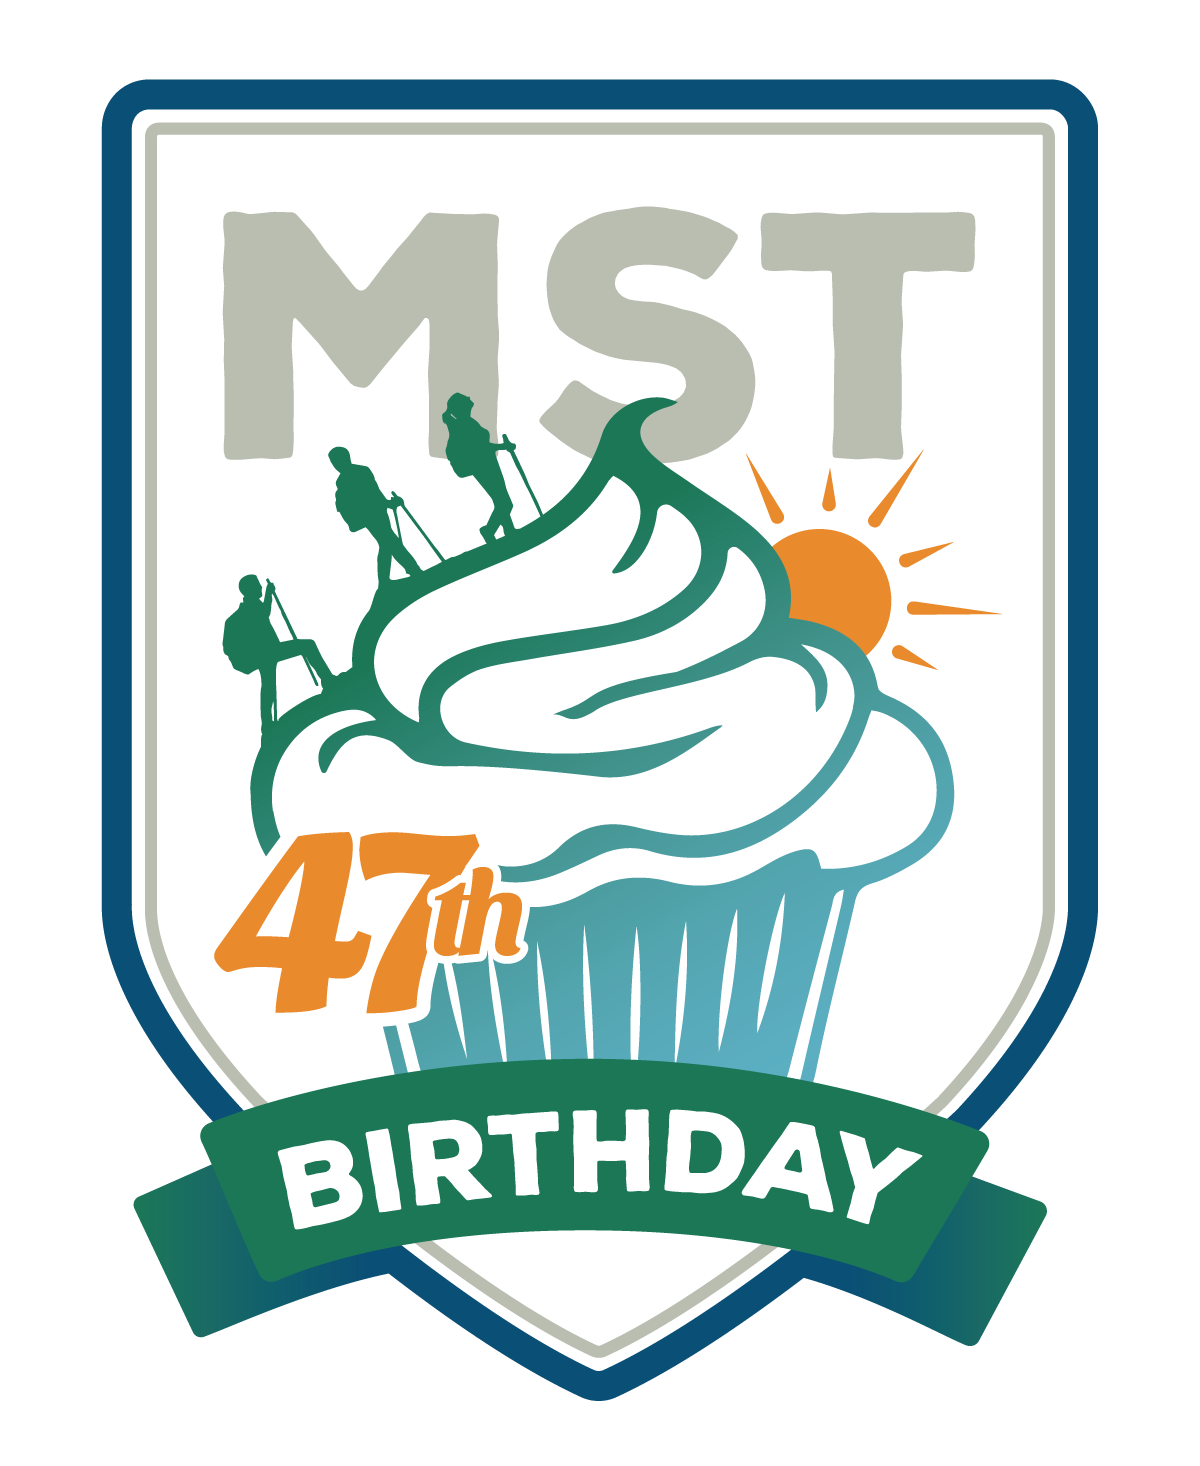 MST 47th Birthday